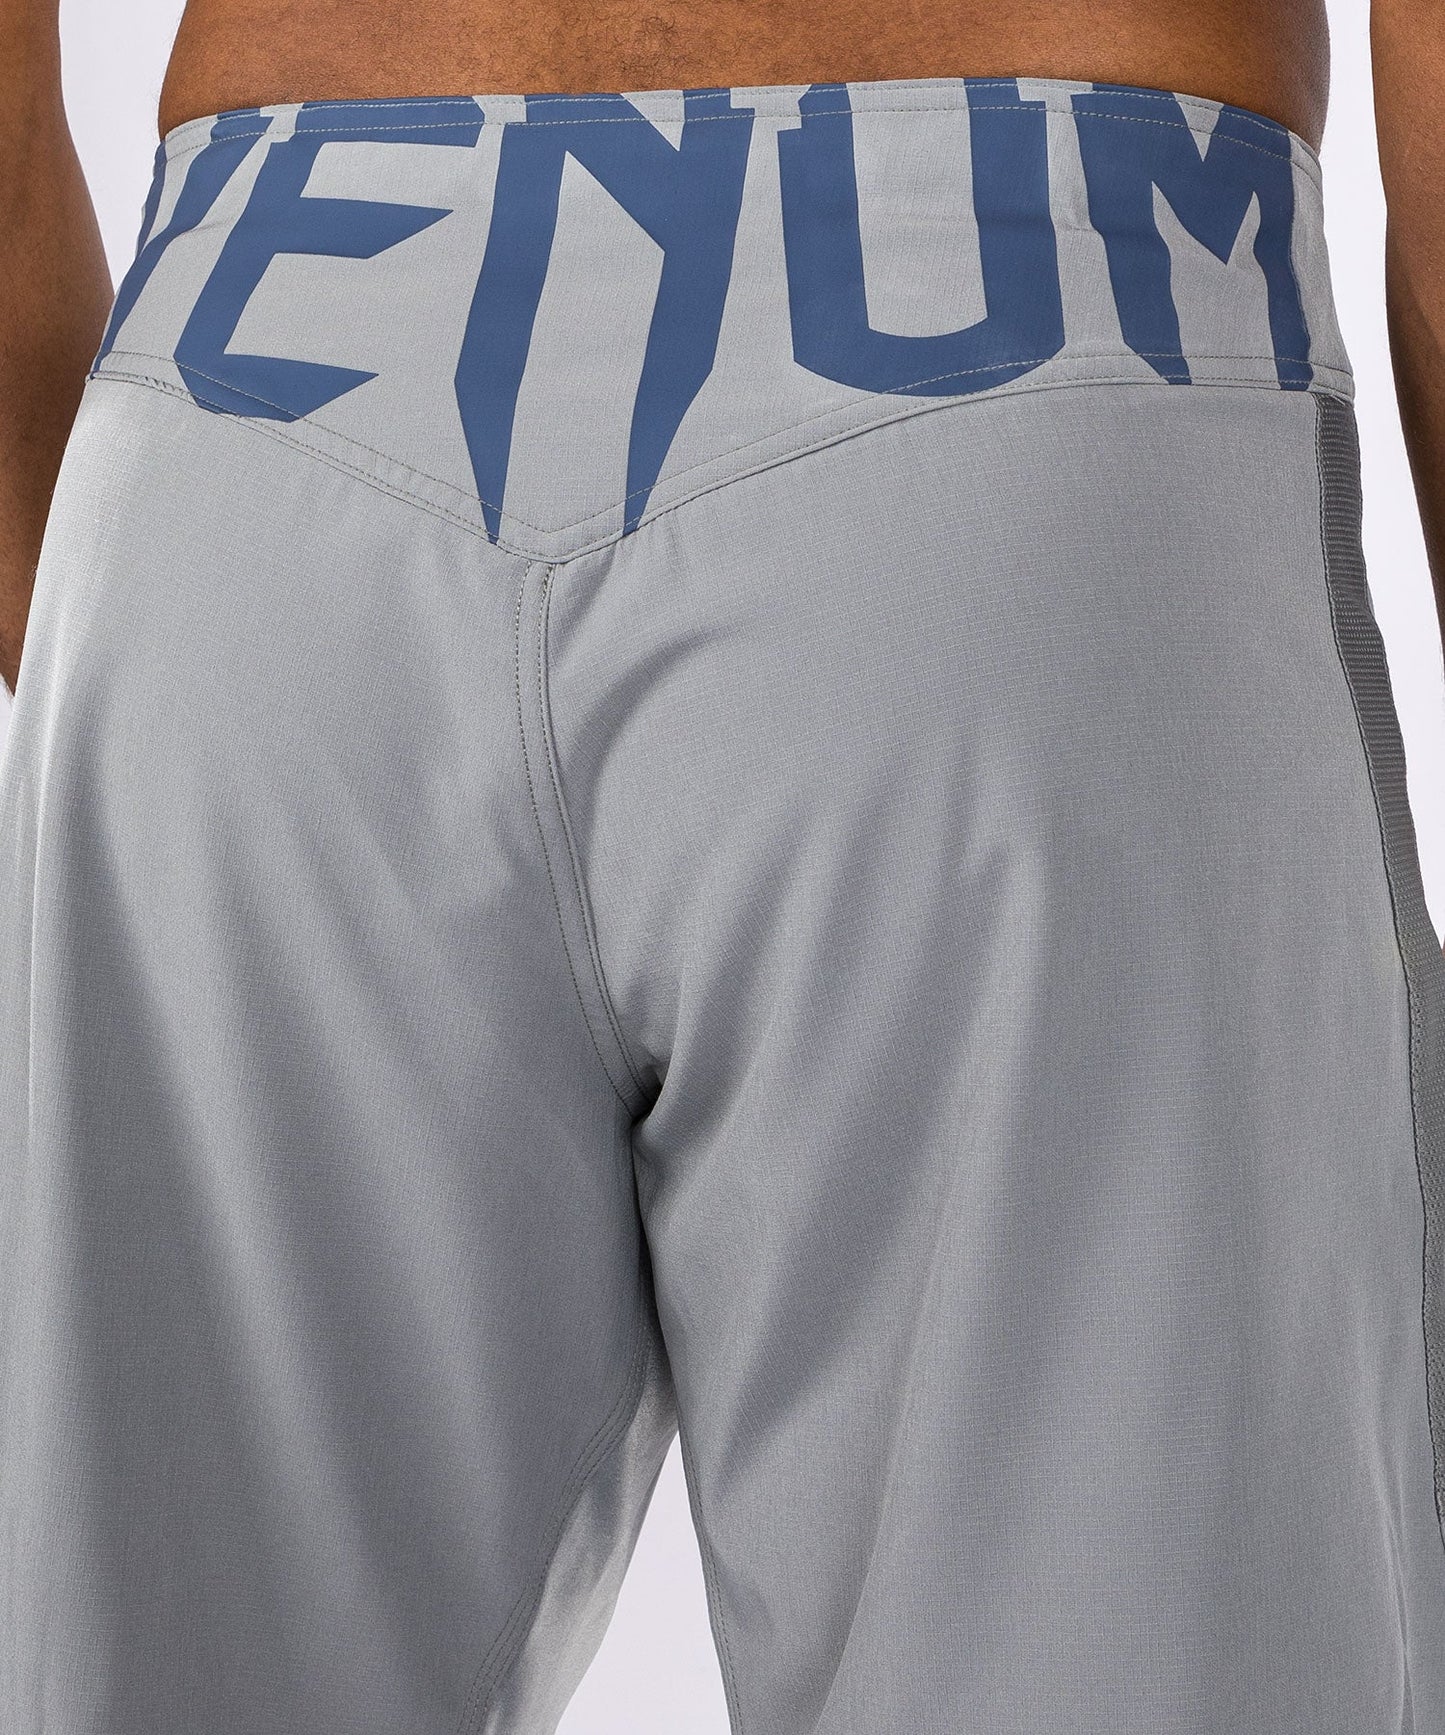 Venum Light 5.0 Combat Shorts - Grau/Blau